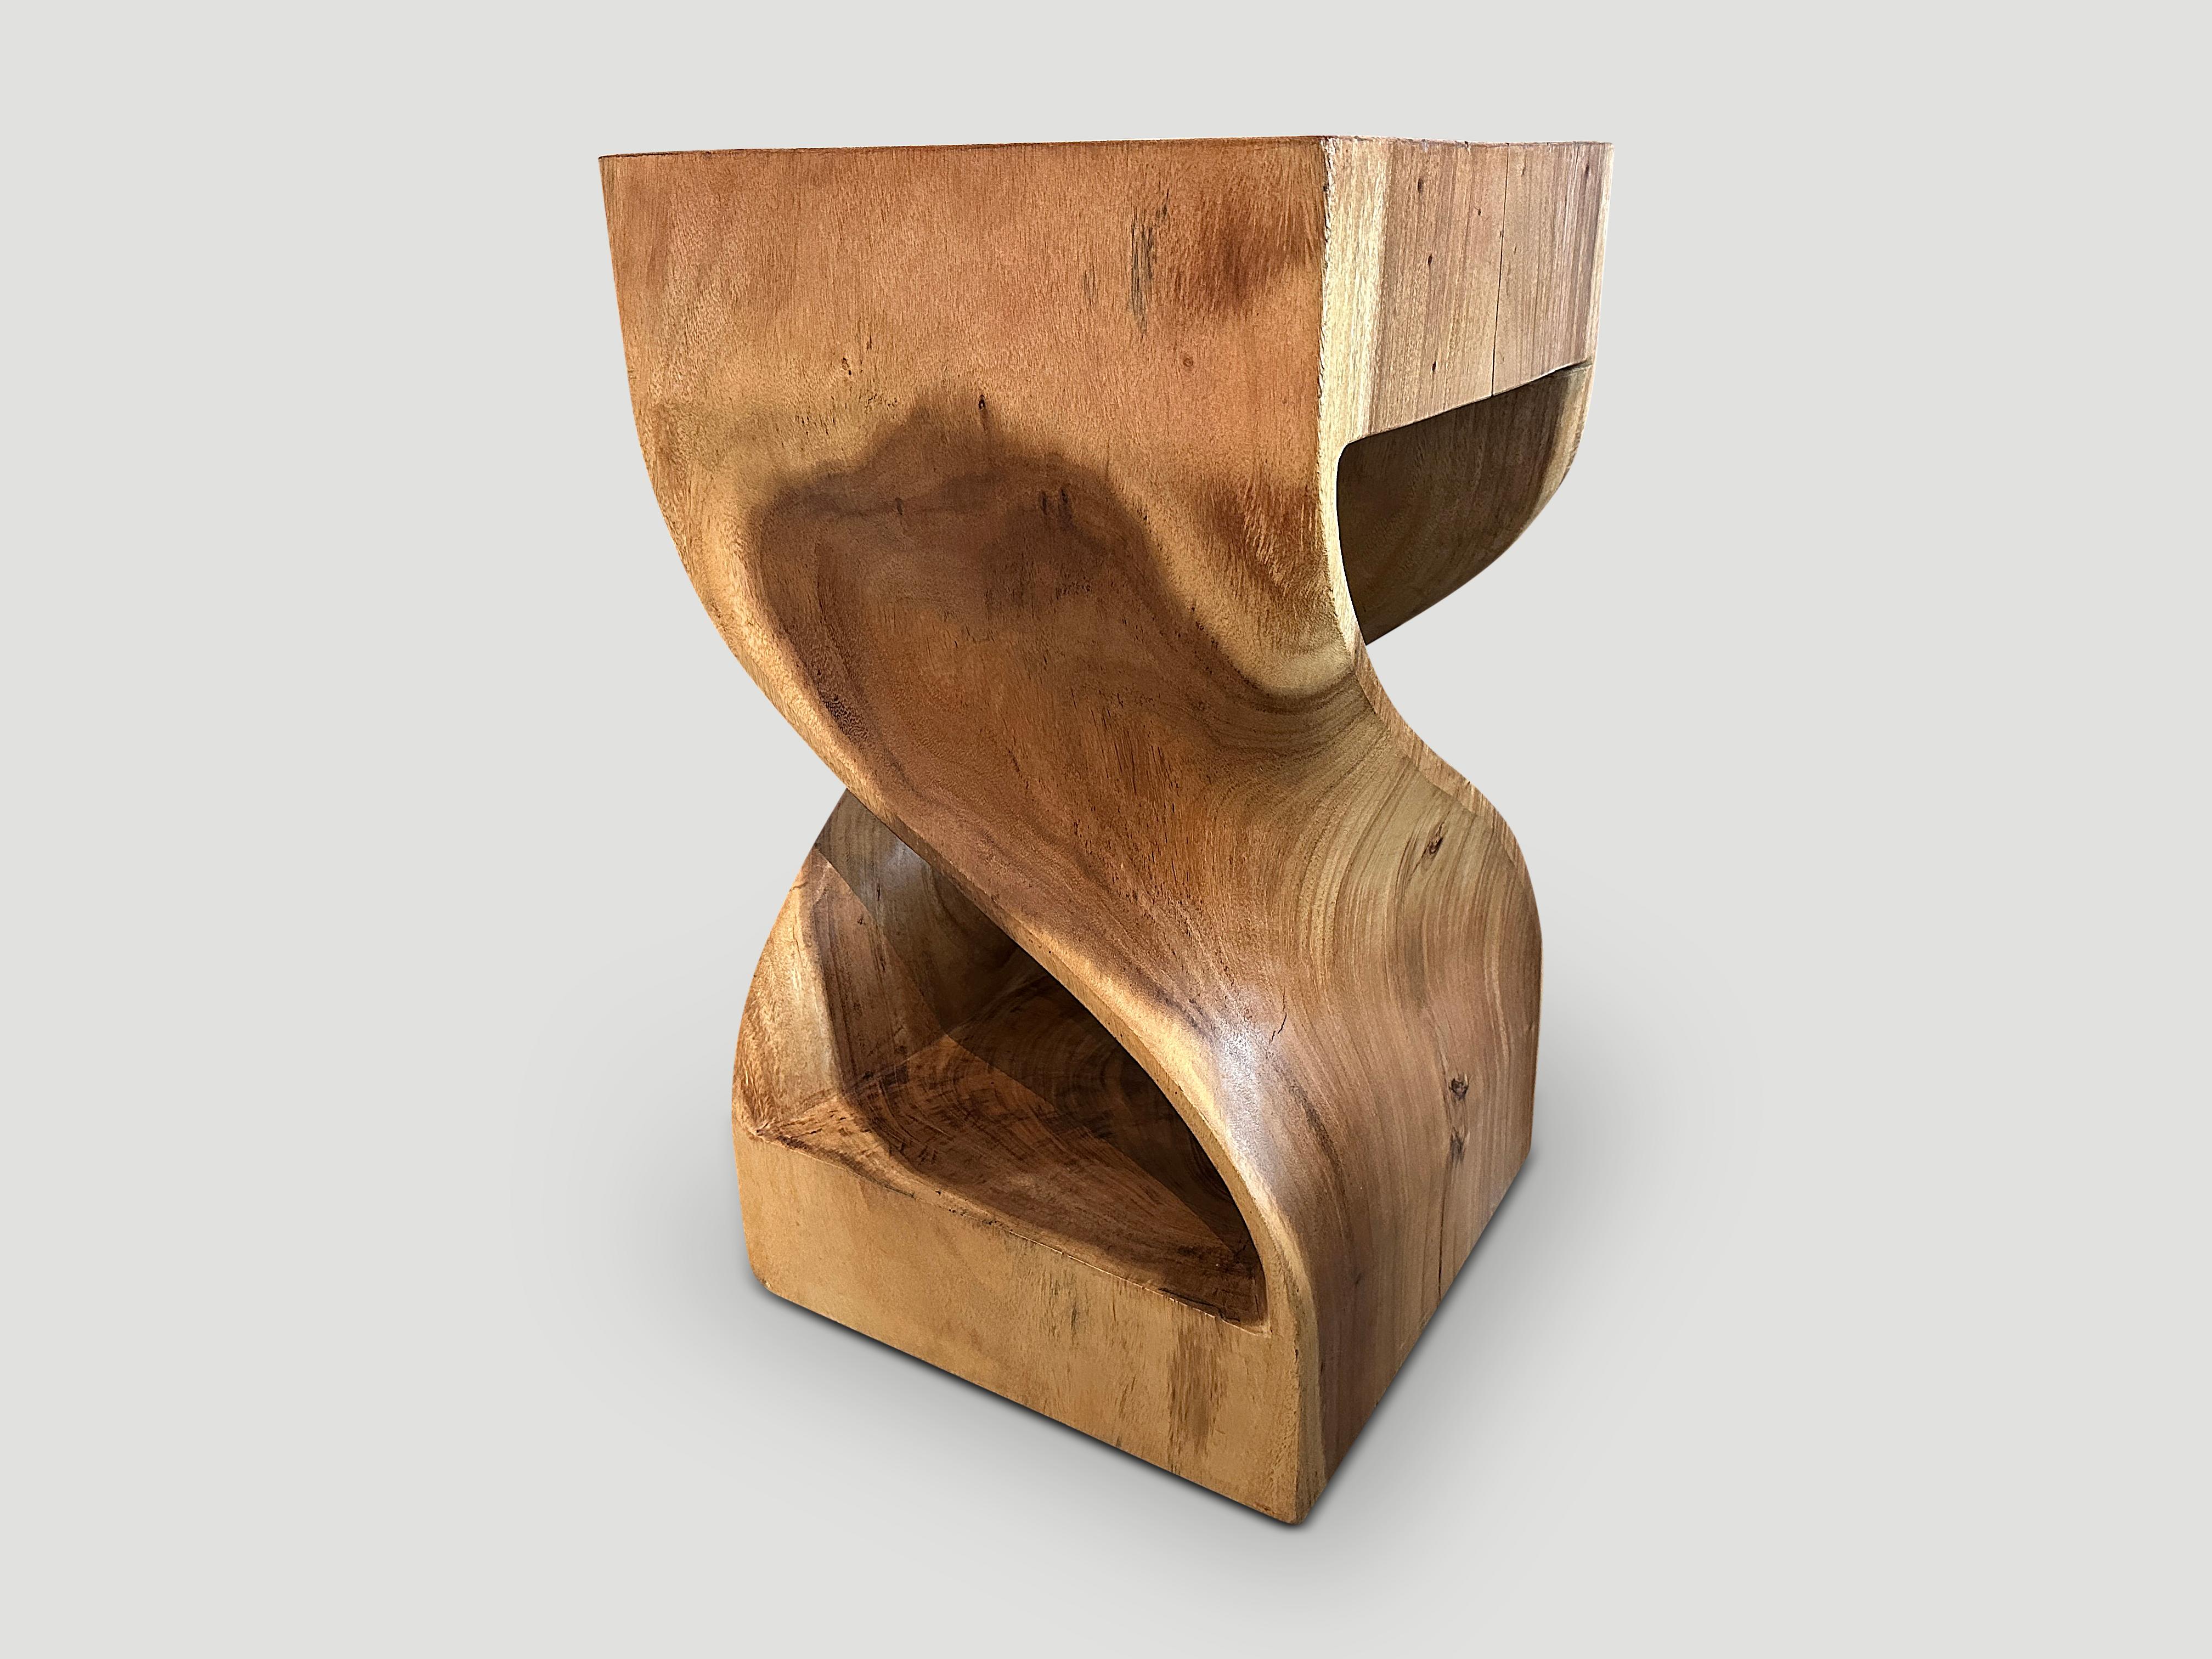 Organic Modern Andrianna Shamaris Sculptural Suar Wood Side Table or Pedestal For Sale